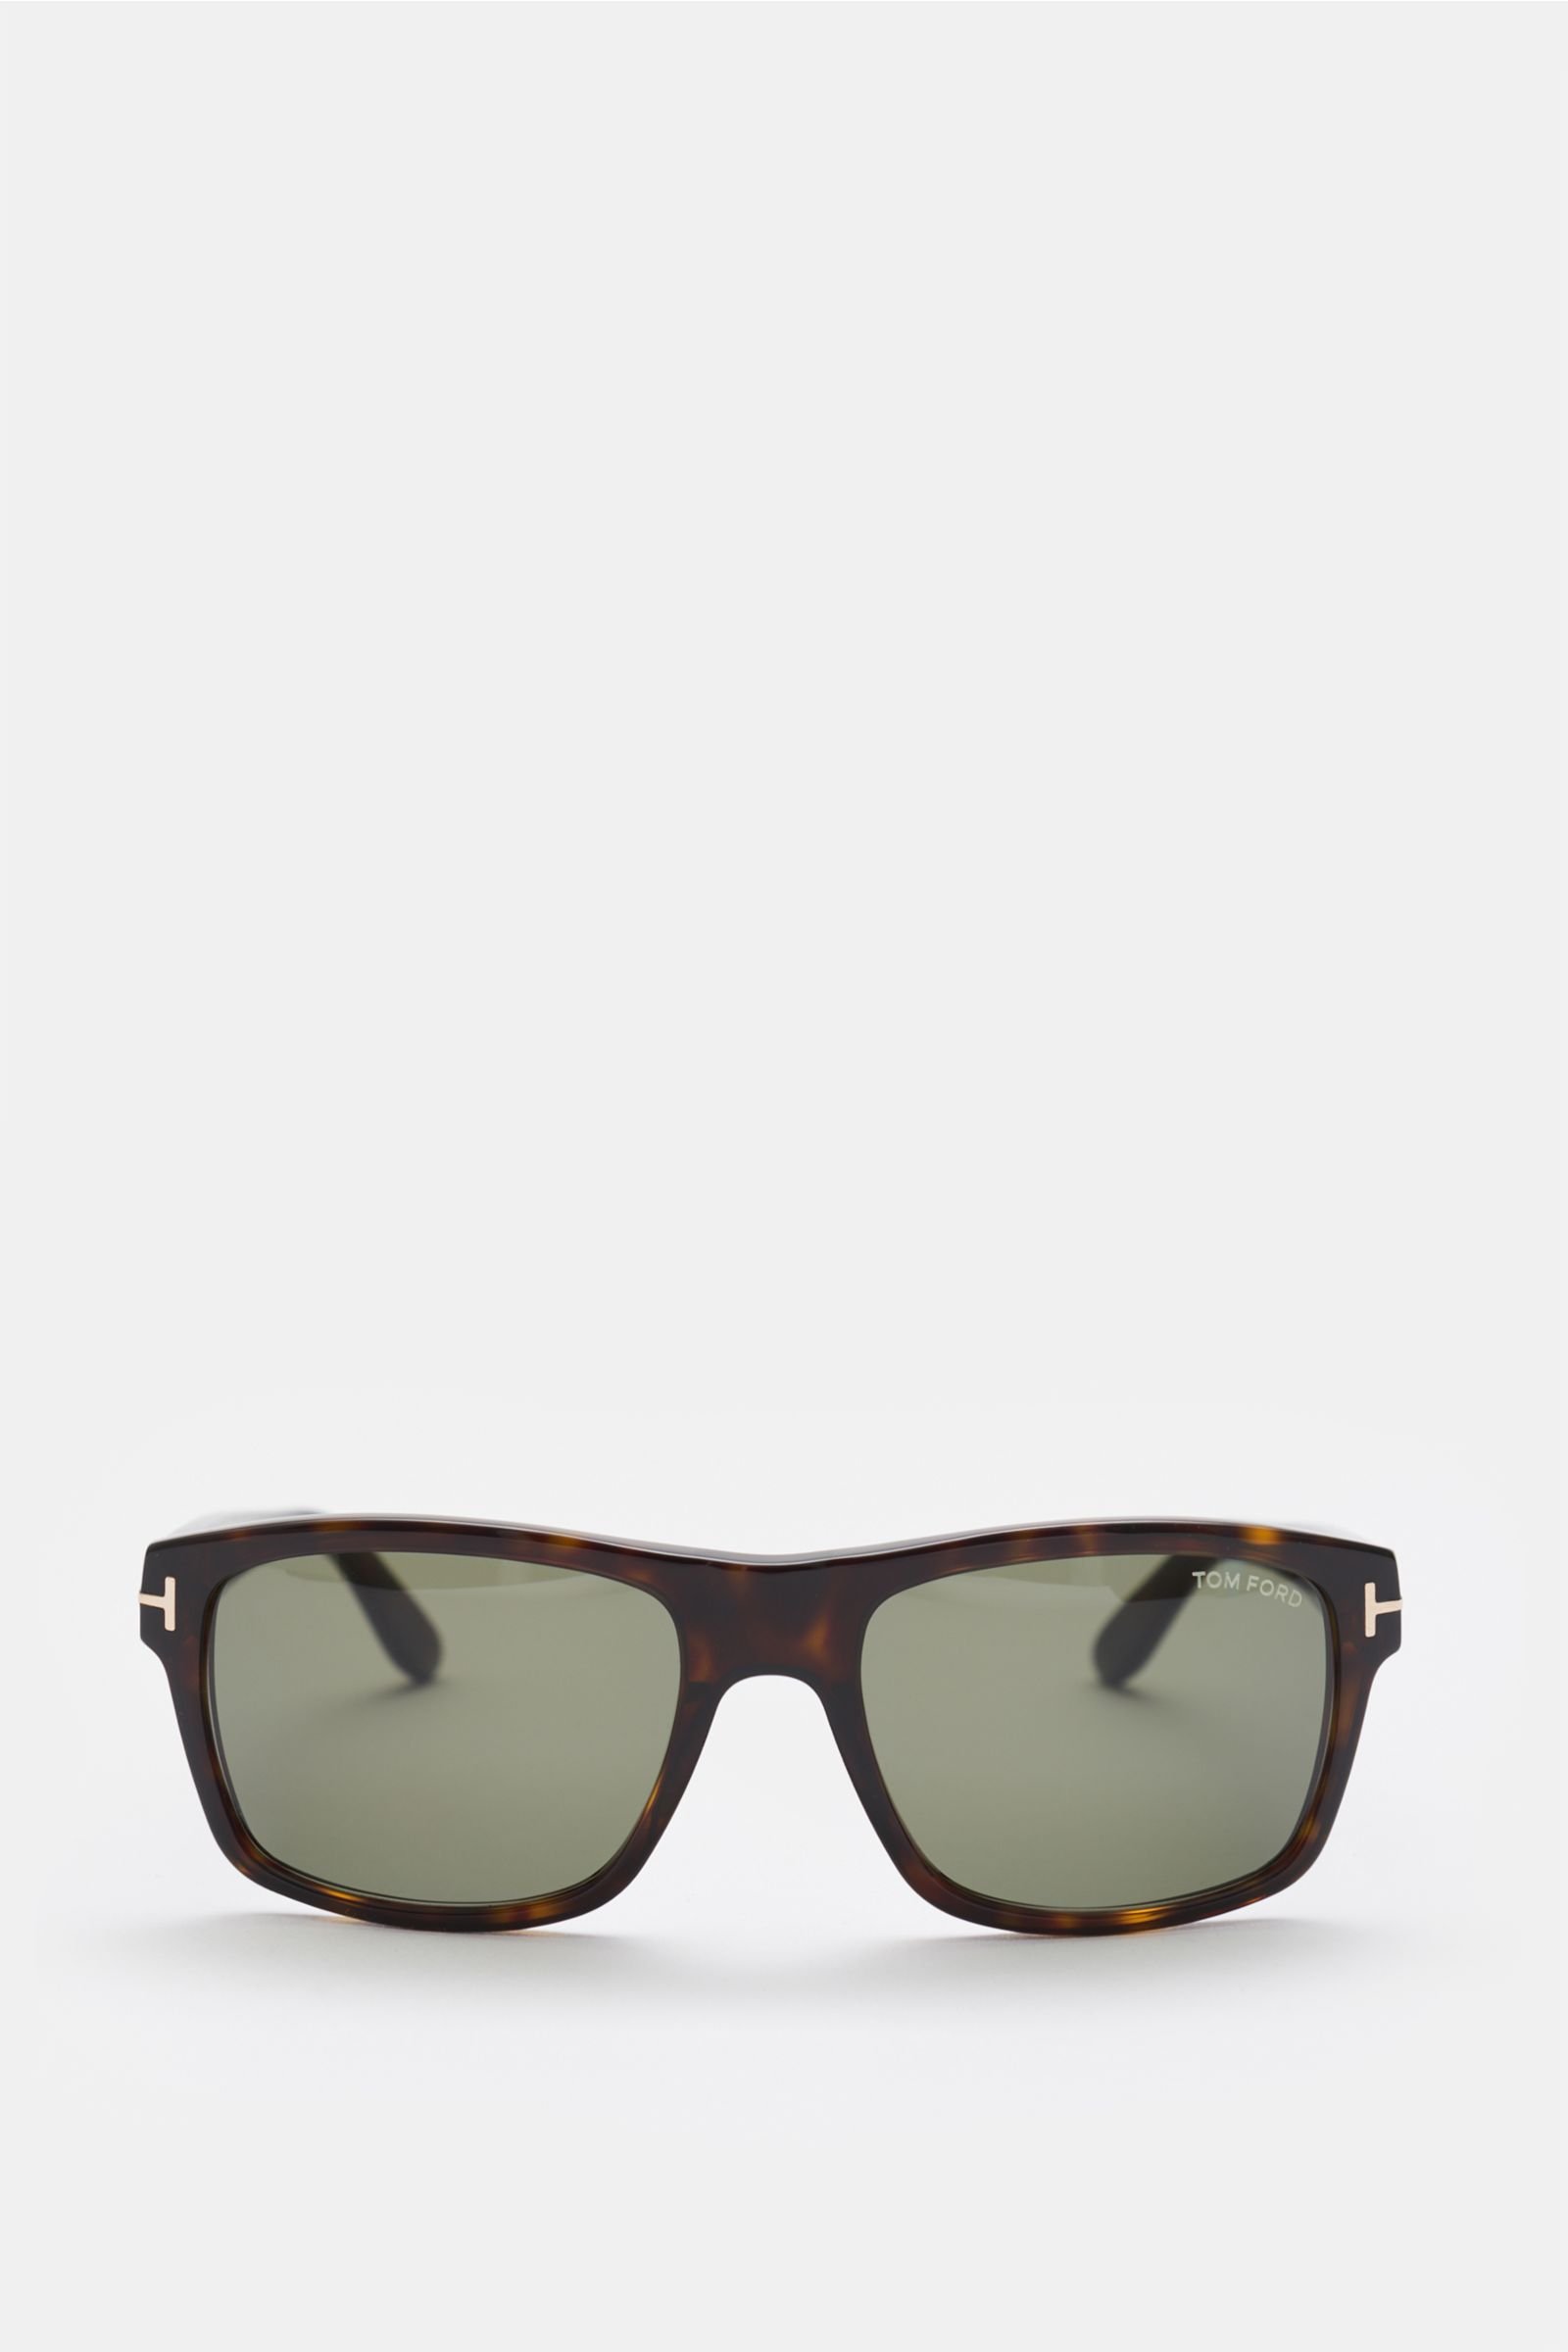 Sunglasses 'August' dark brown/green